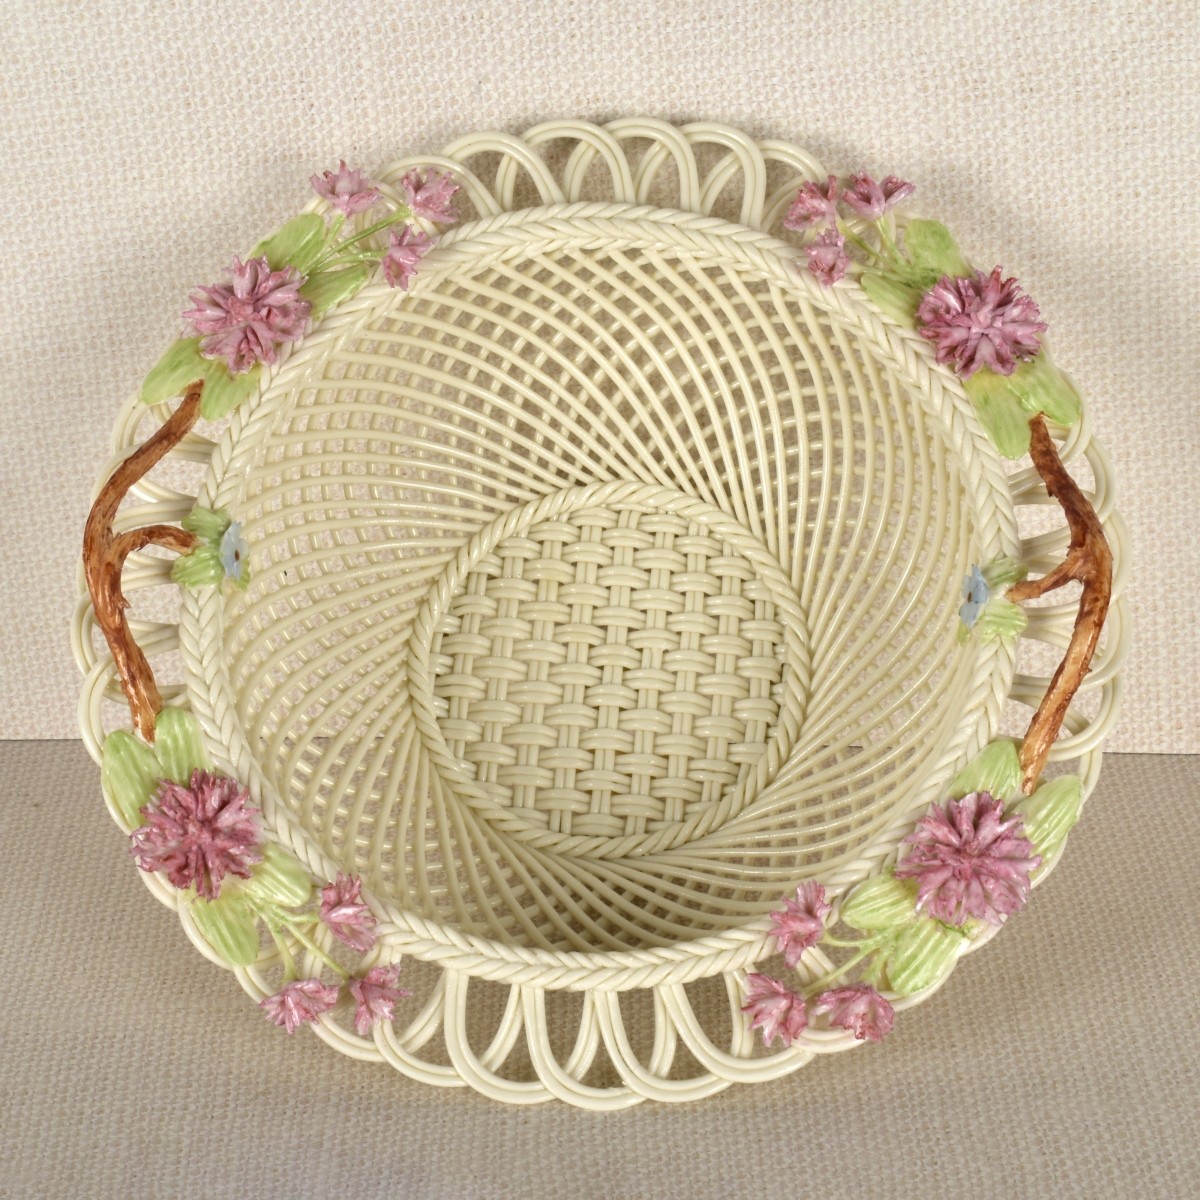 Four Porcelain Flower Baskets